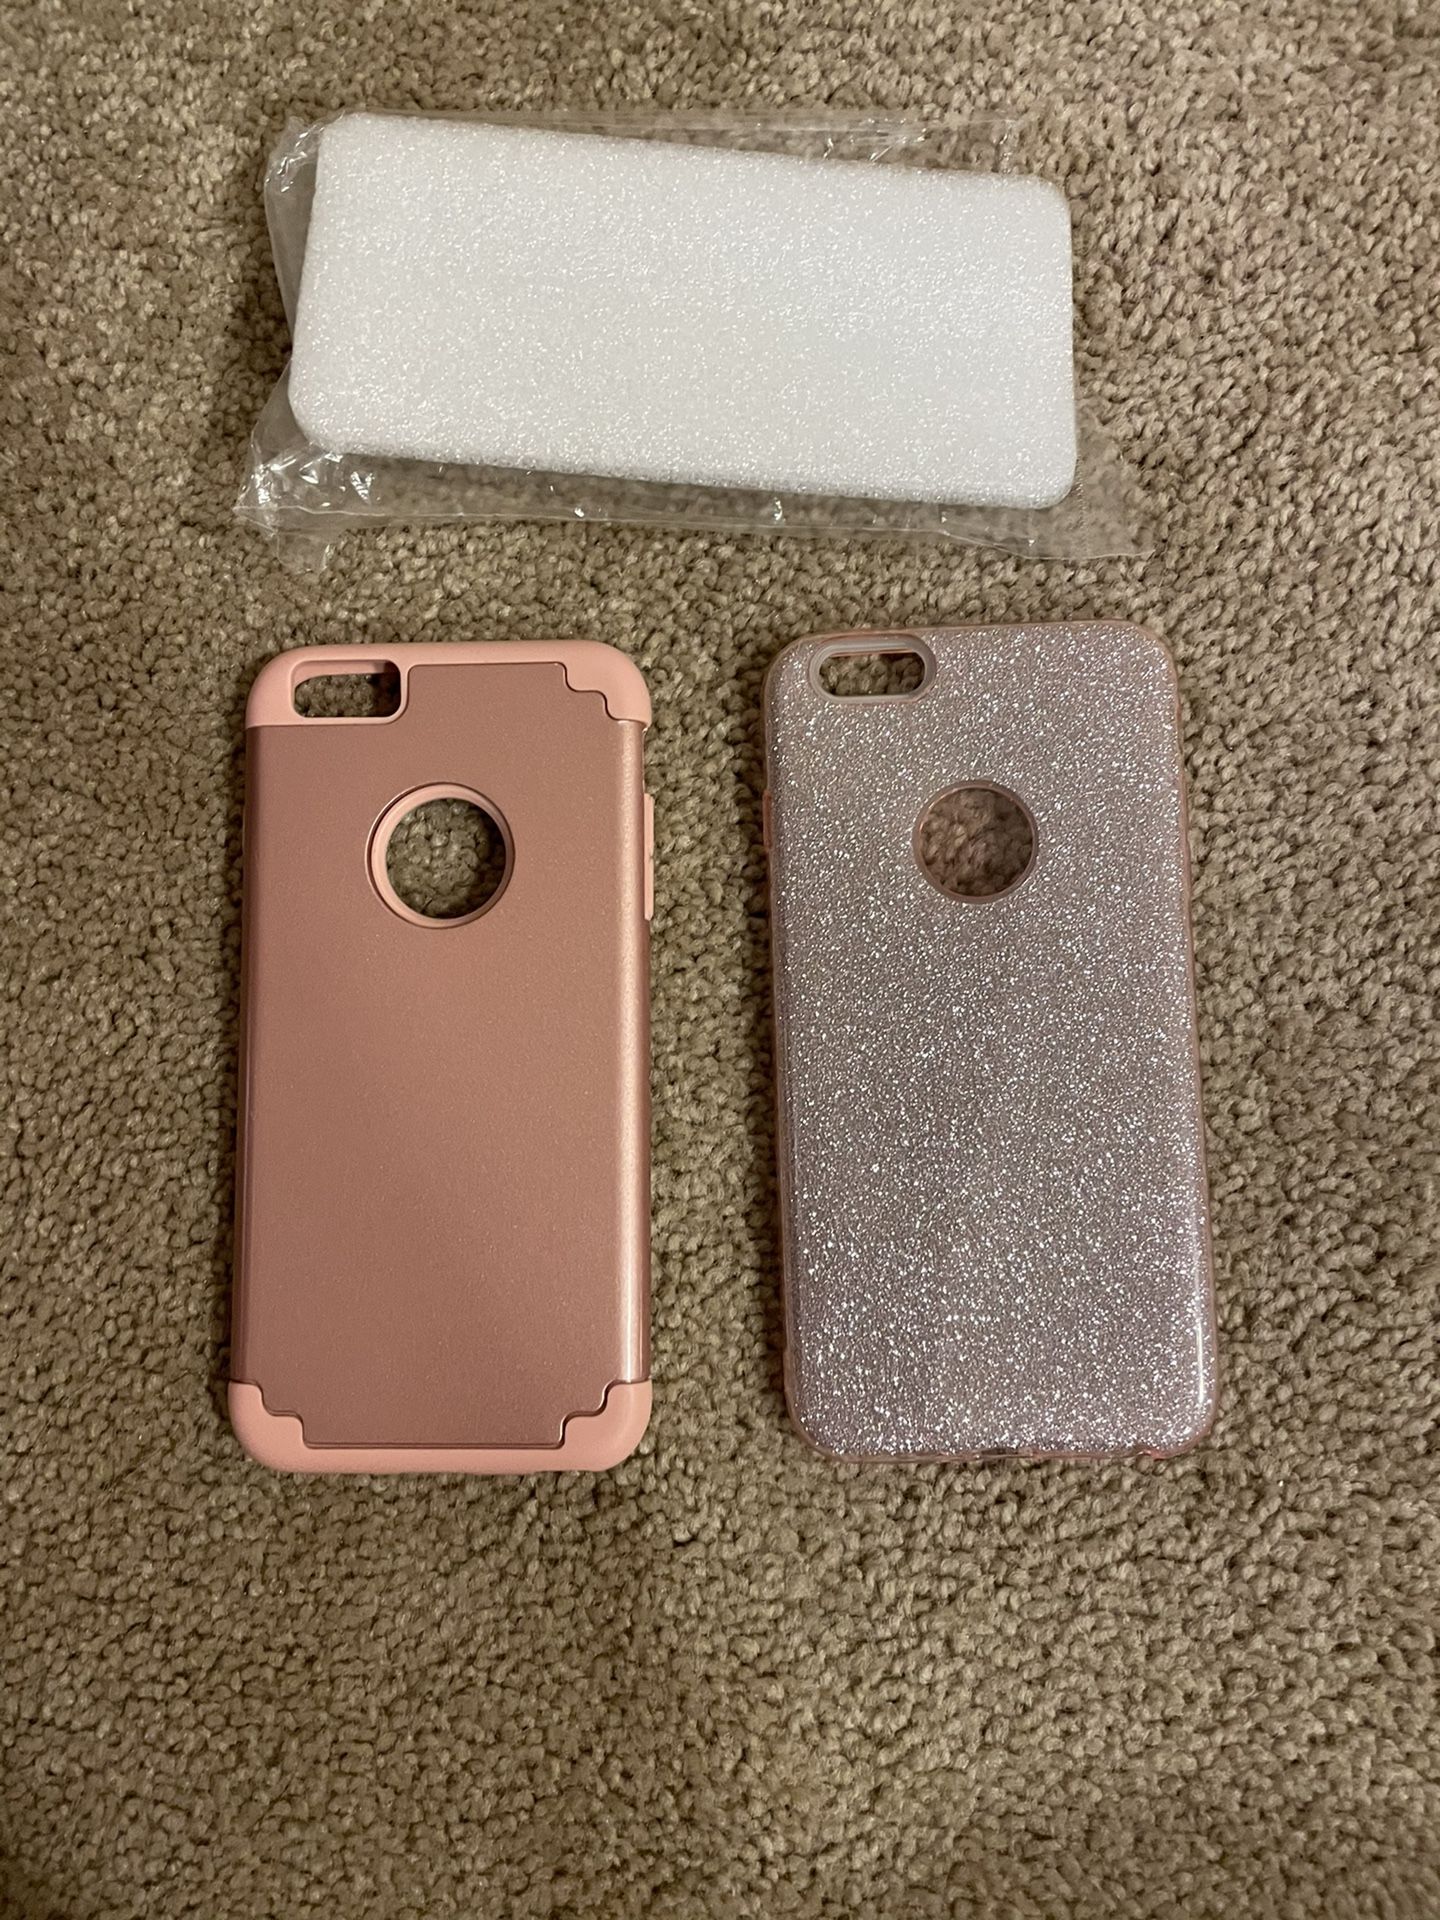 iPhone 6 Plus Case - Glitter Case Is New